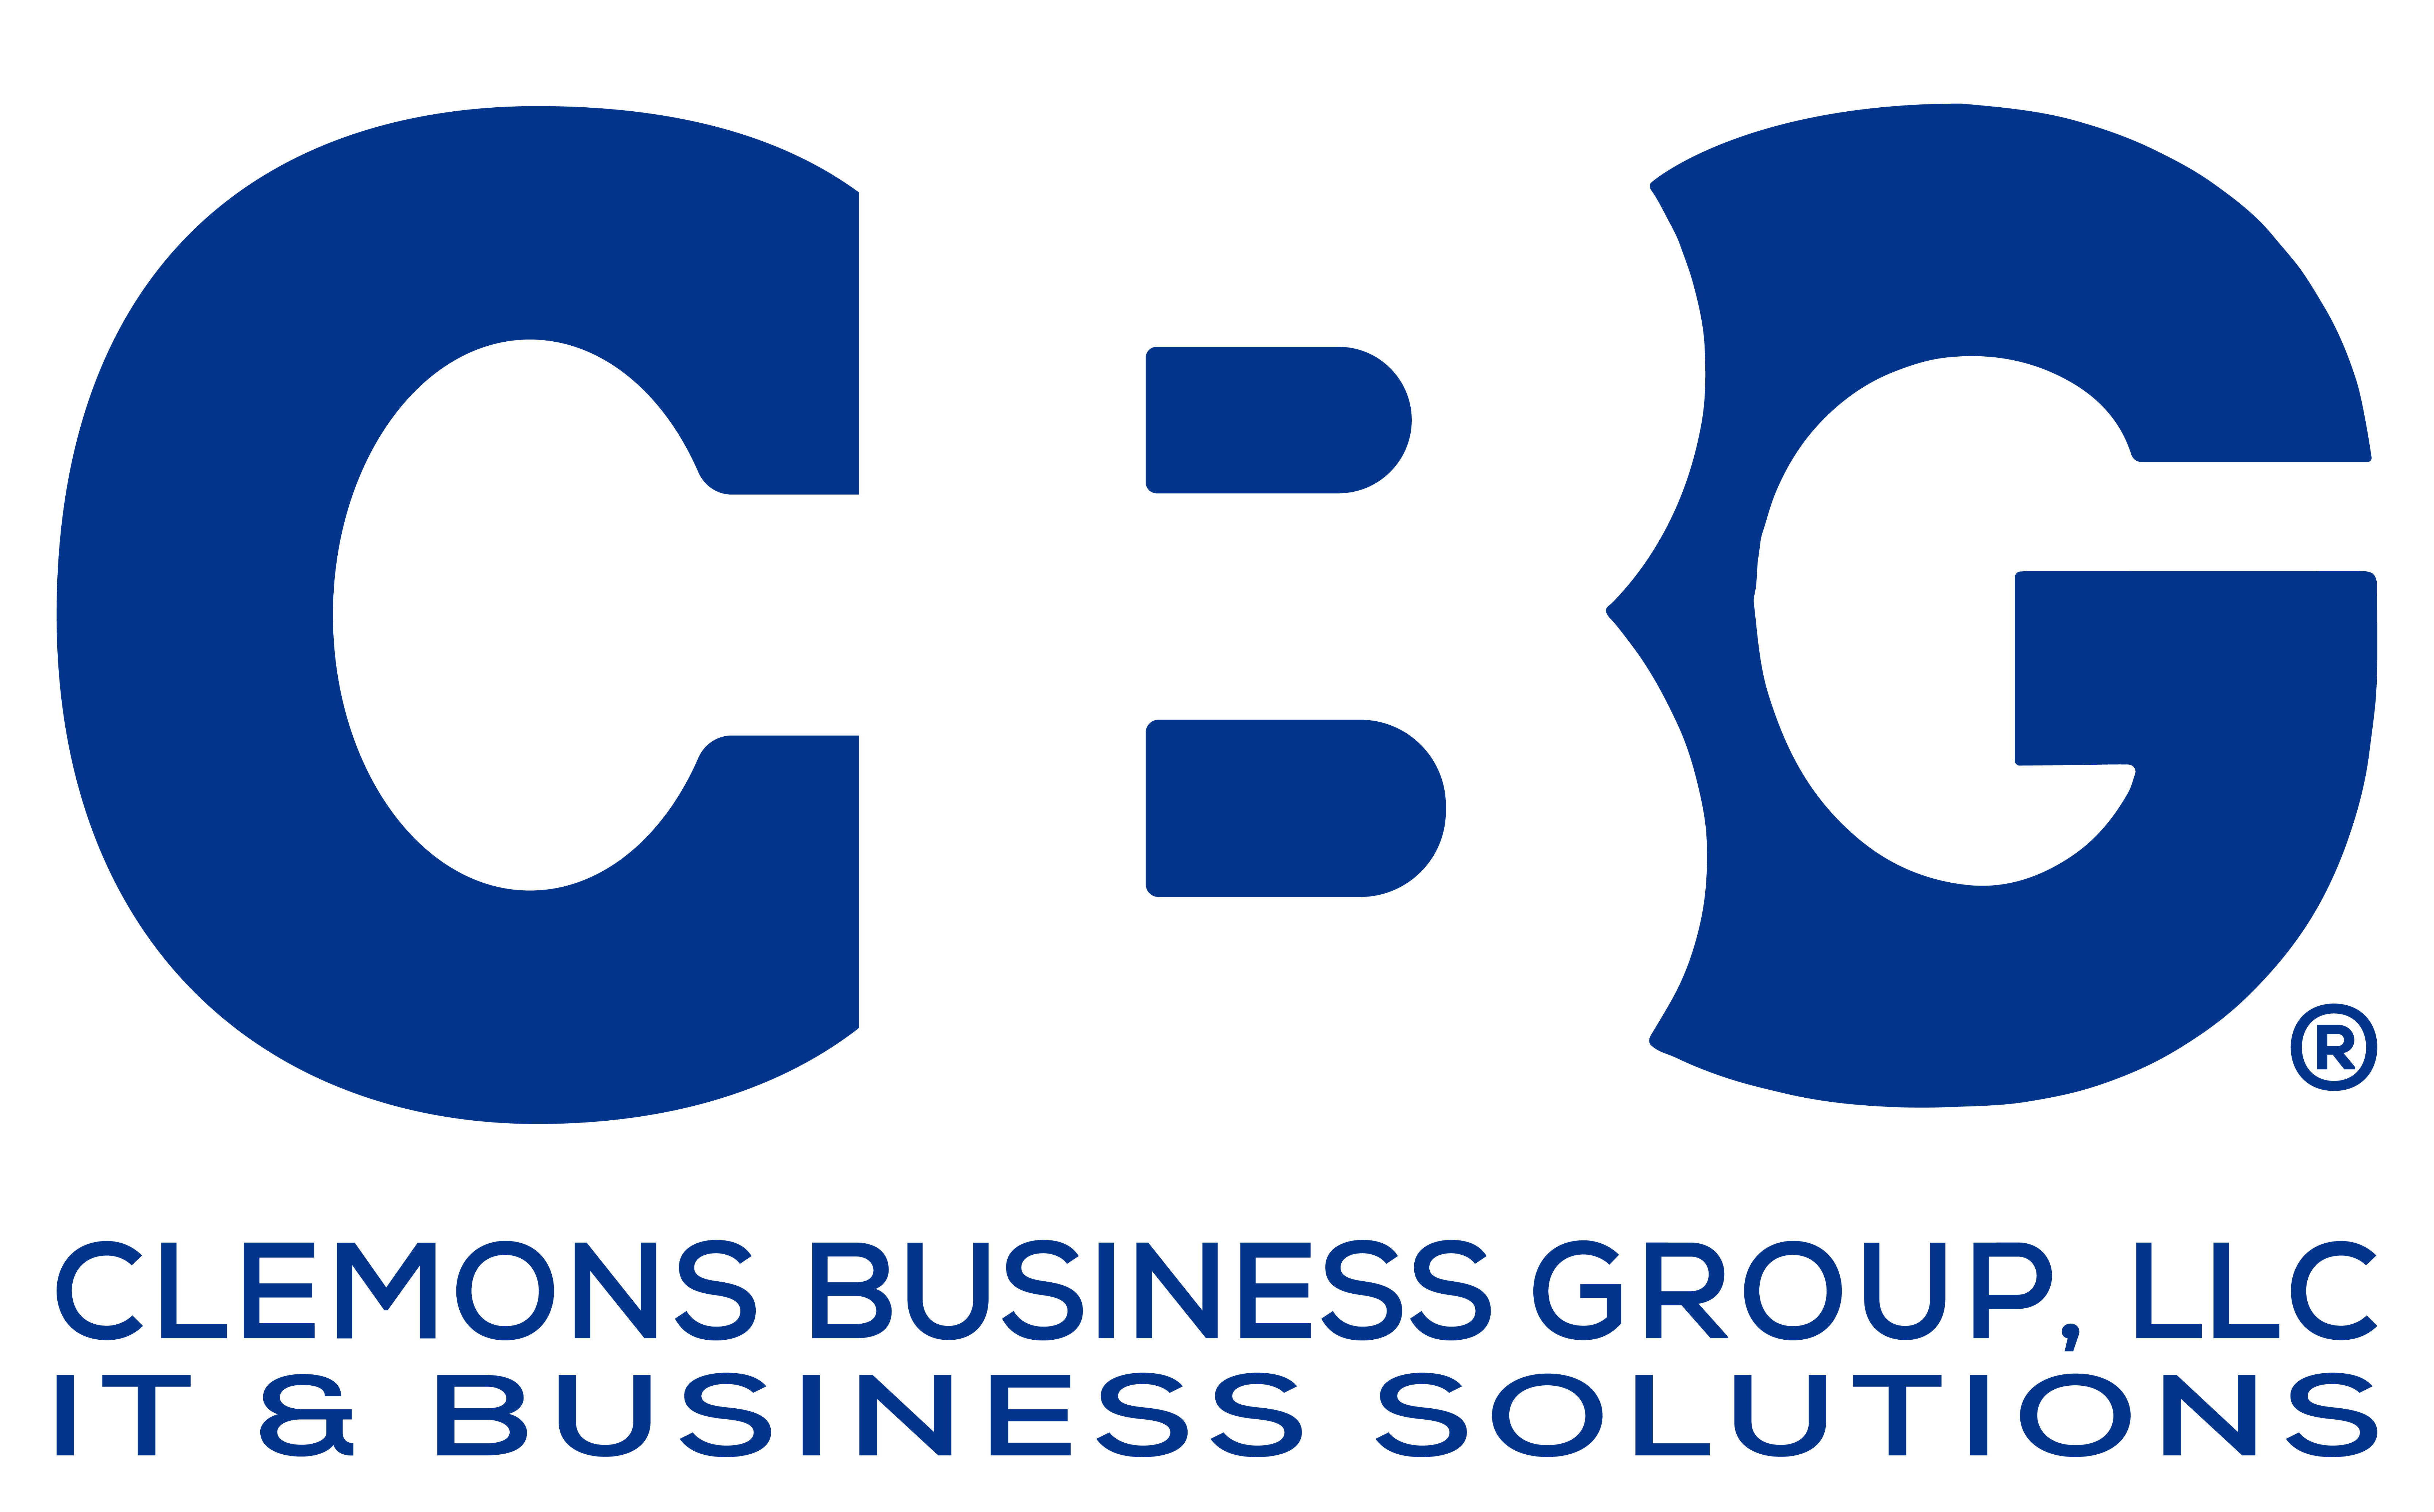 CBG IT & Business Solutions